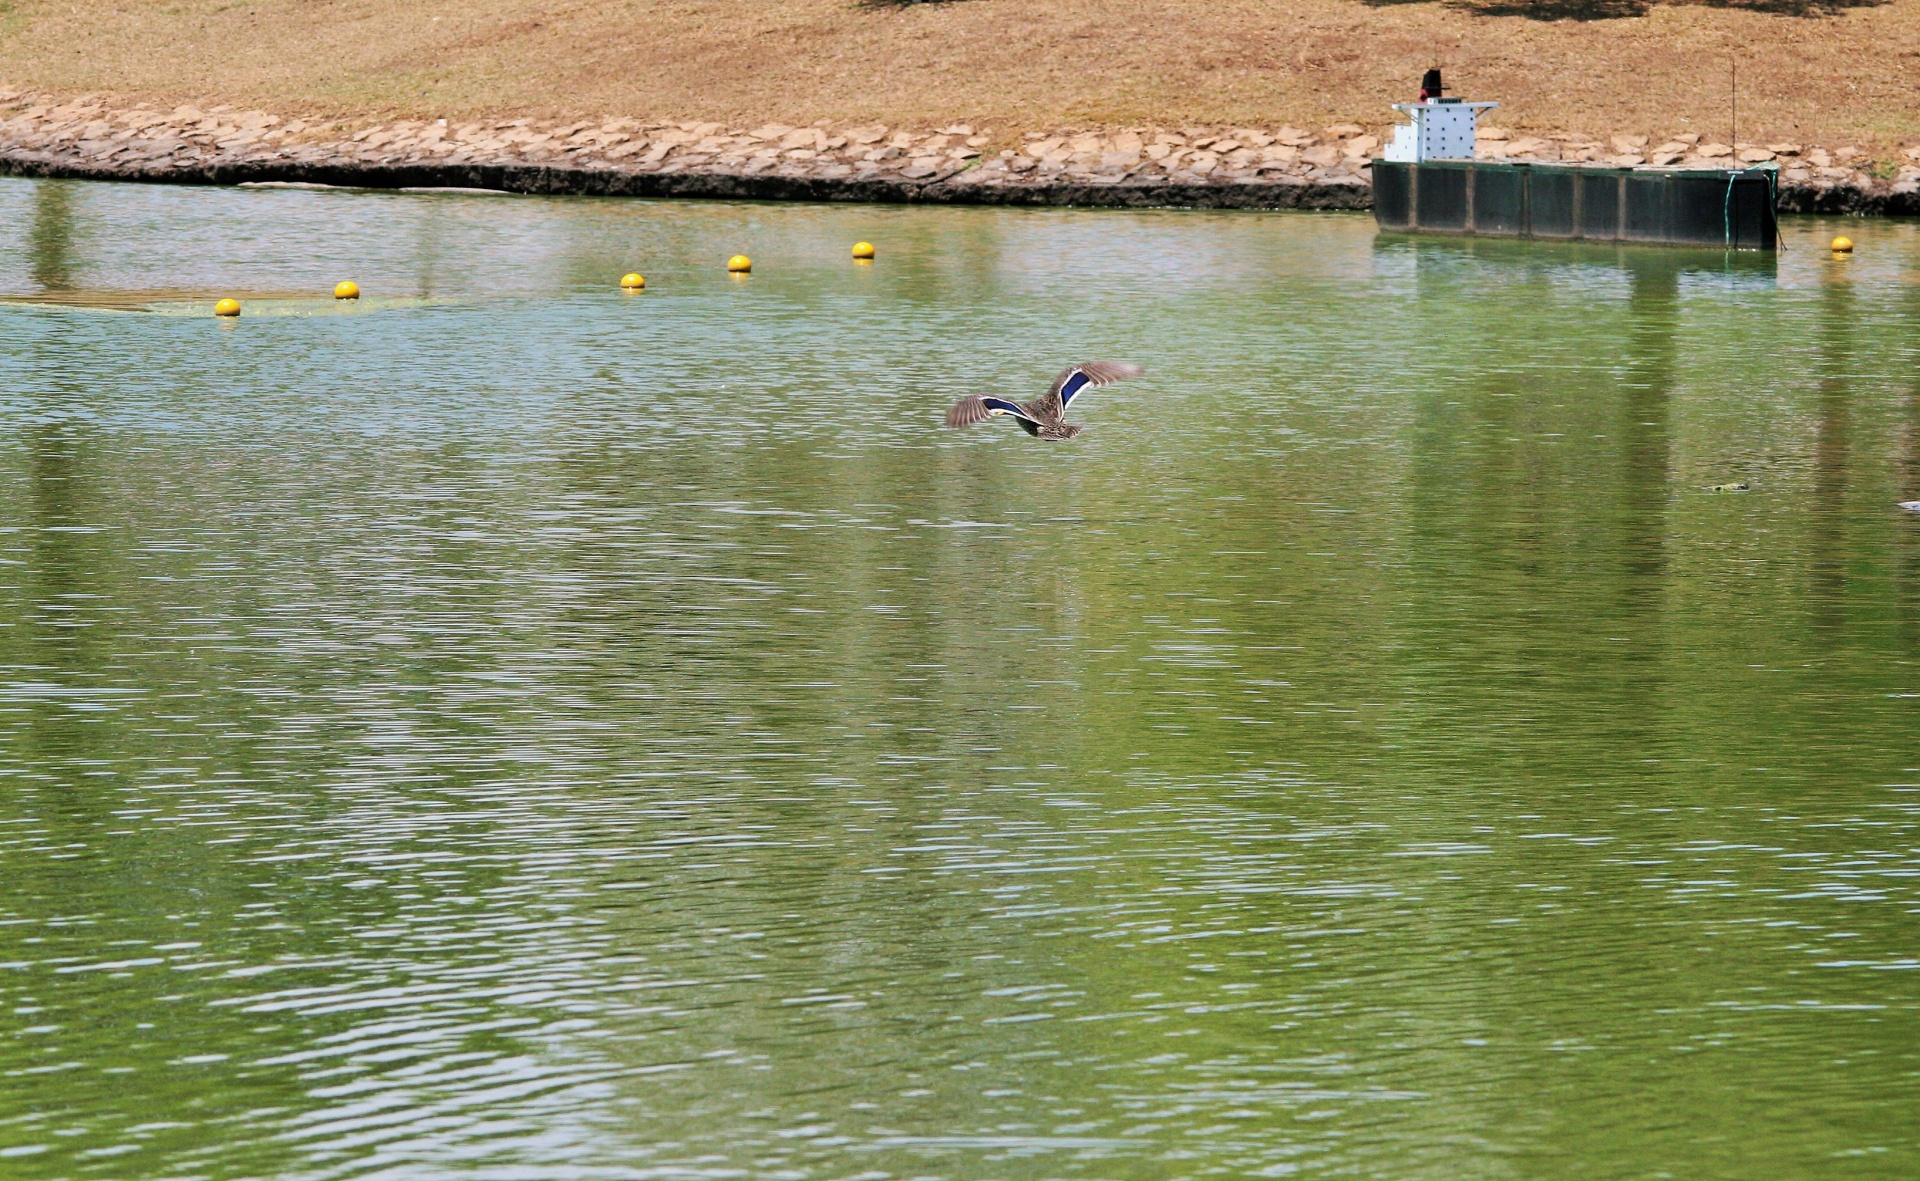 Vôo pato do pato selvagem sobre a lagoa